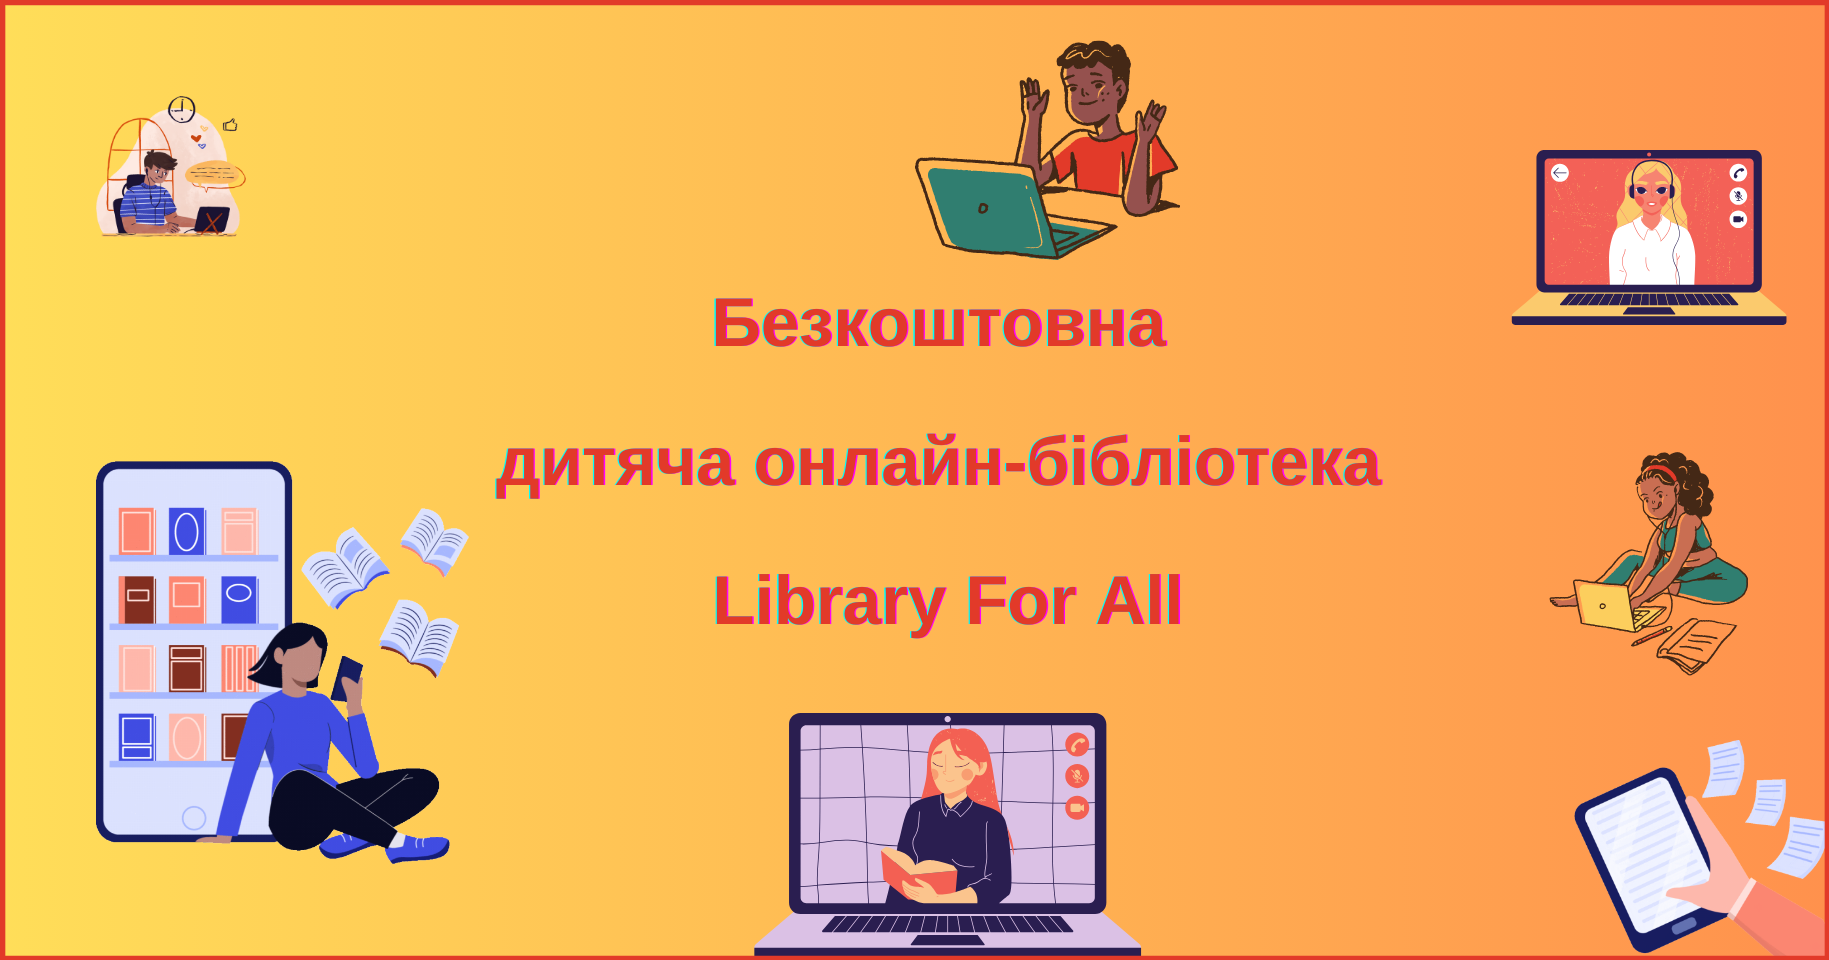 Безкоштовна дитяча онлайн-бібліотека Library For All